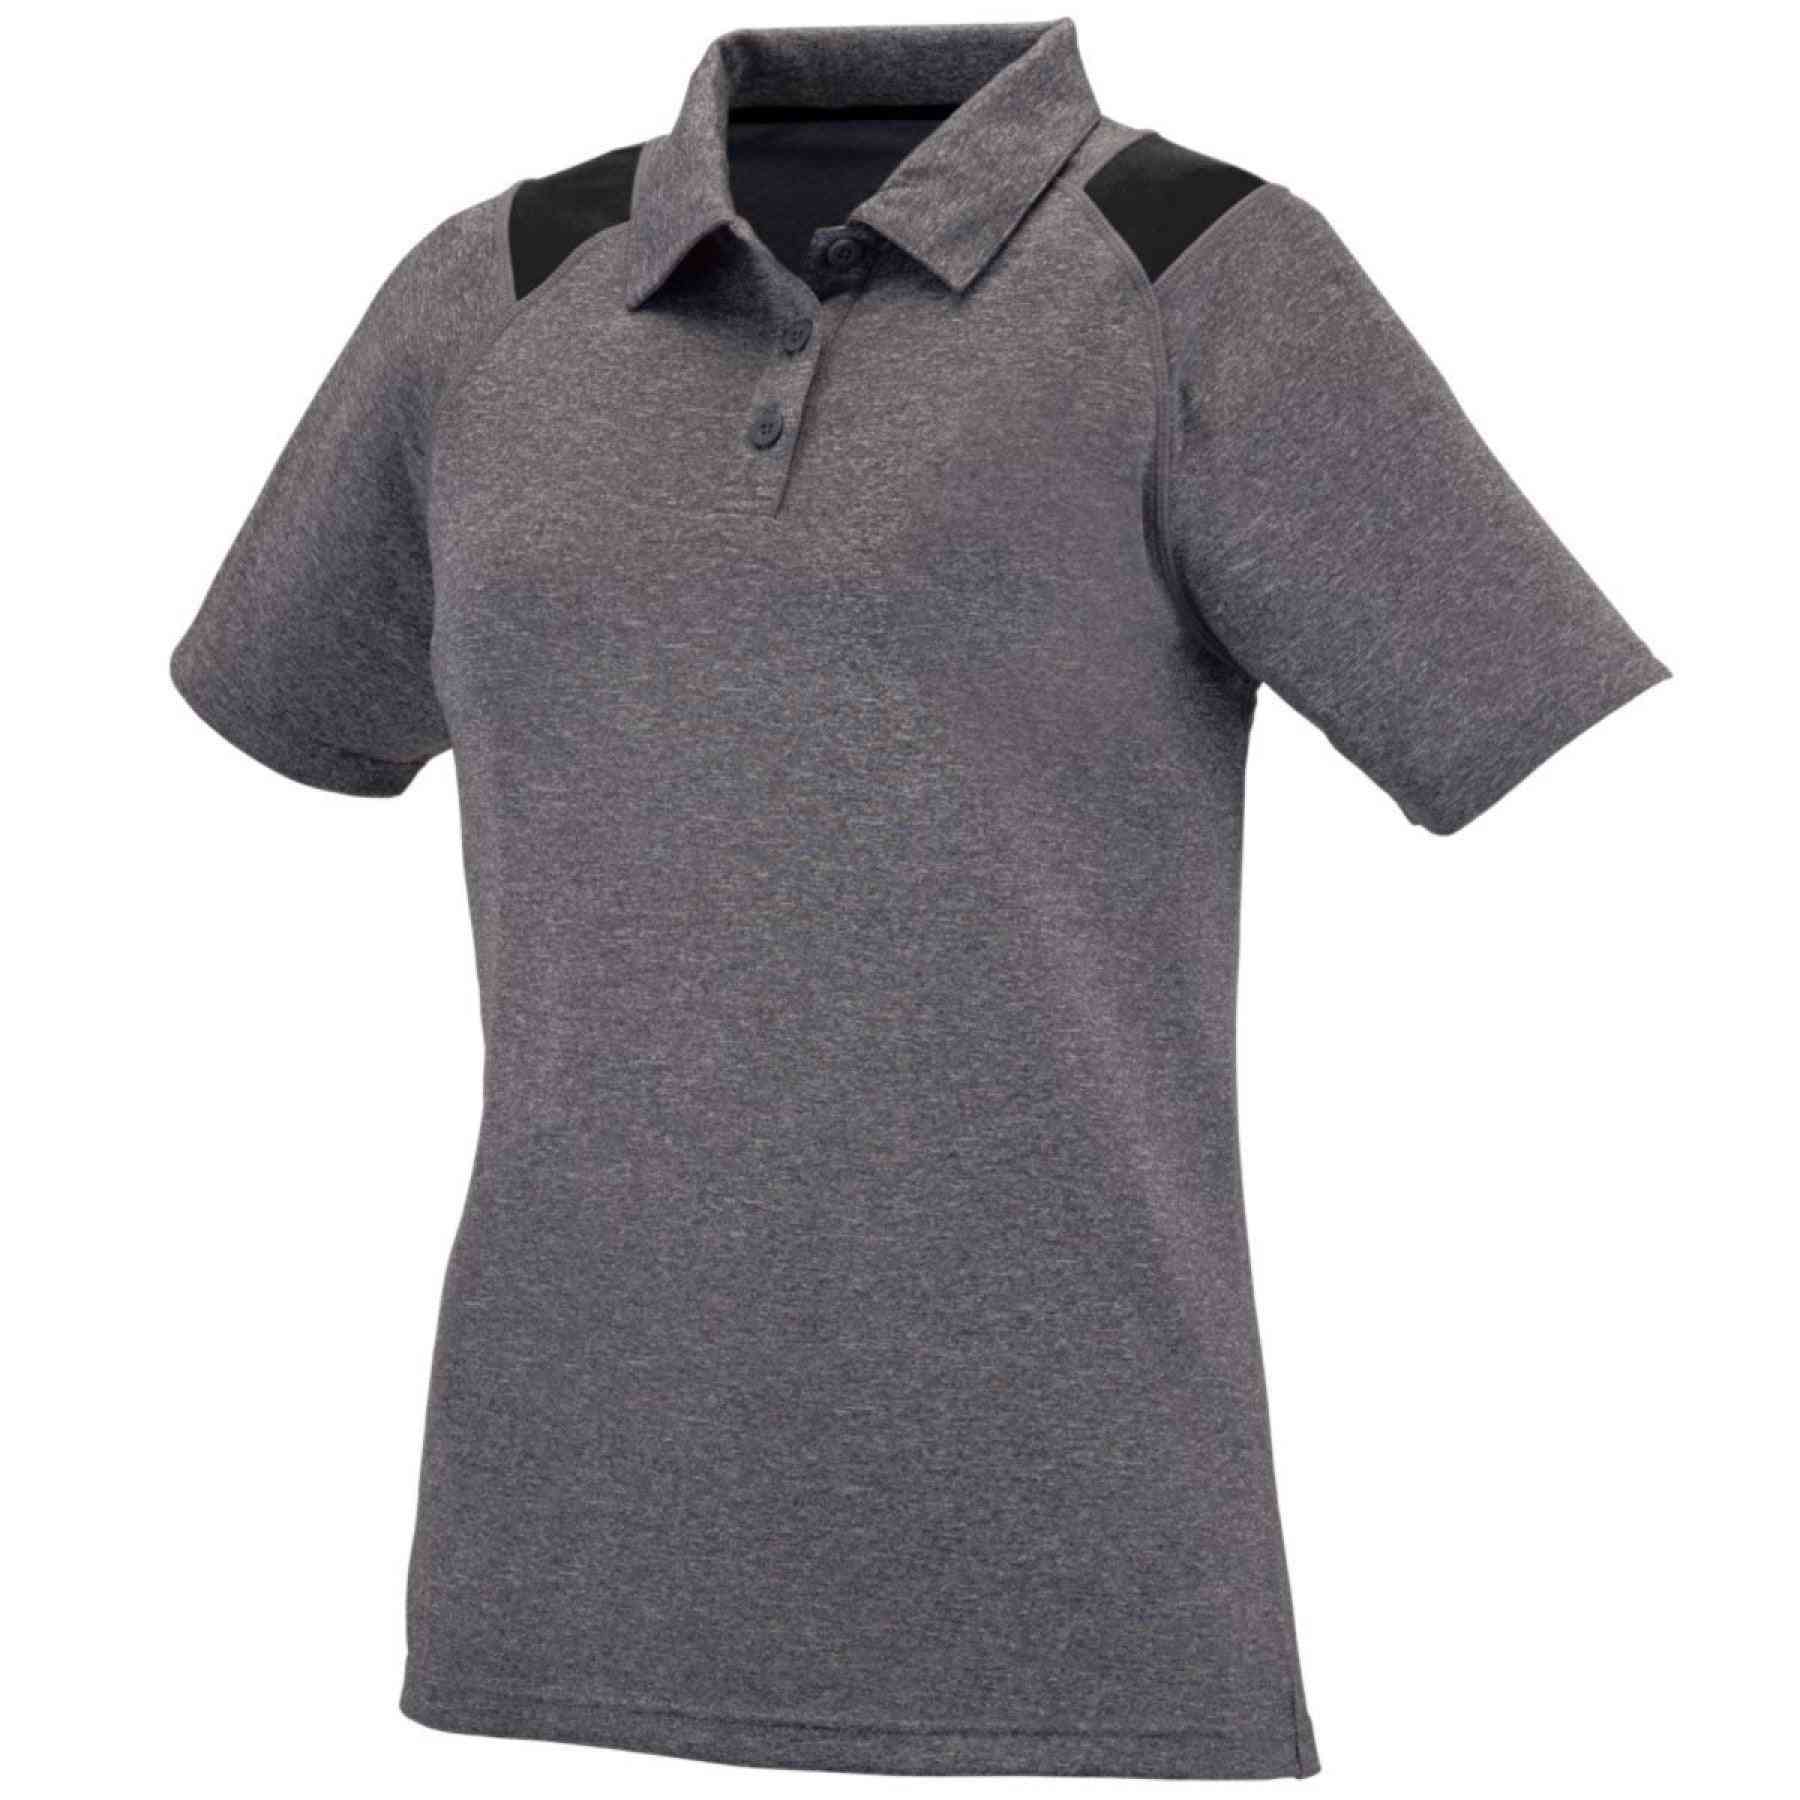 Women's Athletic Short Sleeve Torce Polo Sports Shirt